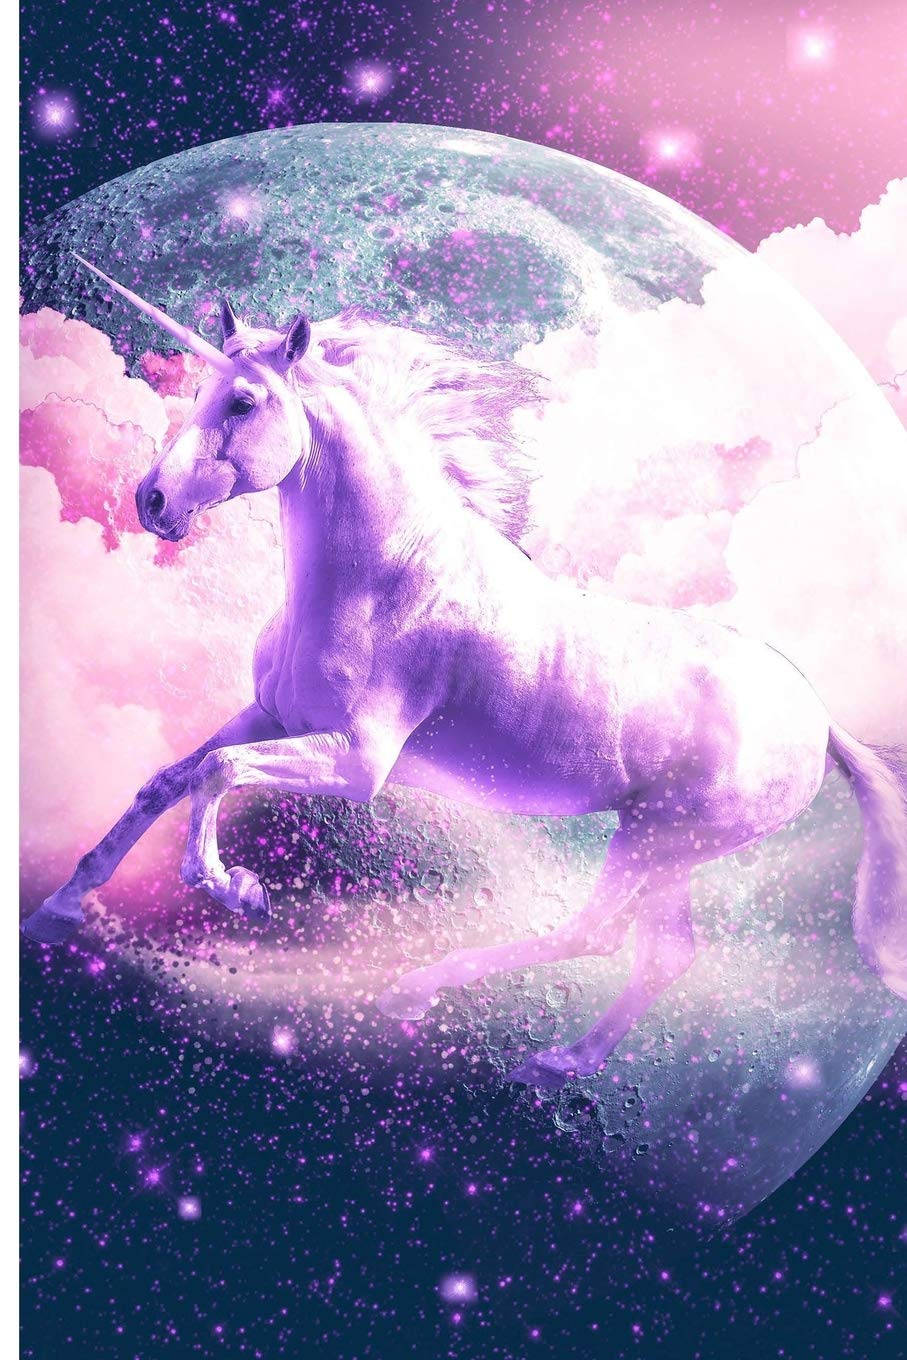 Share more than 159 unicorn wallpaper hd iphone latest